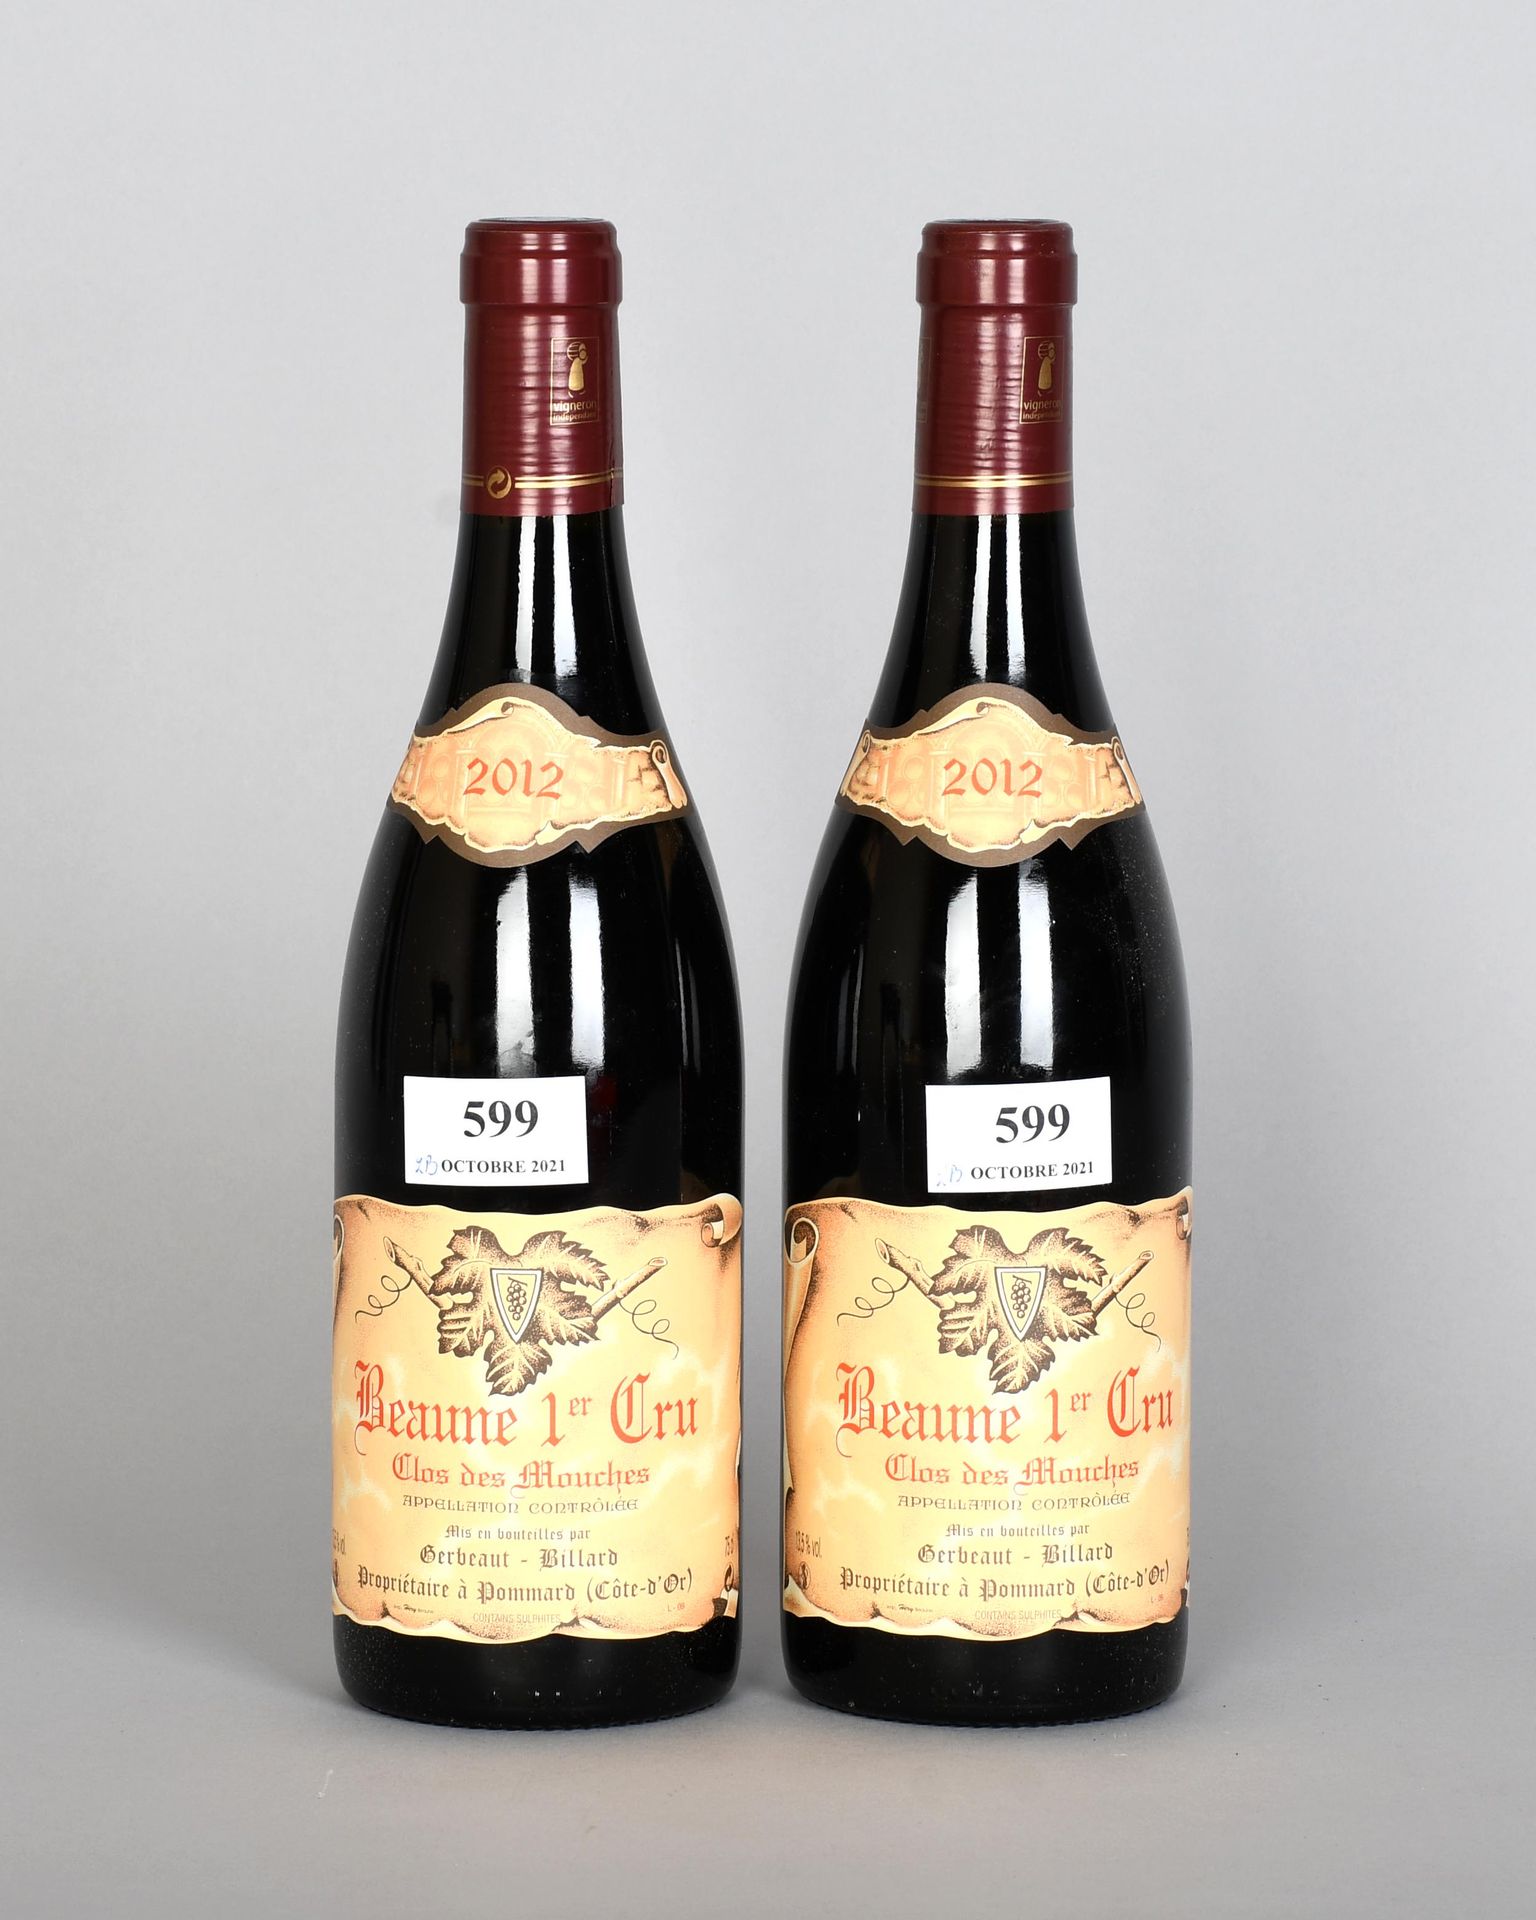 Null 博纳2012年 - 原产地保护 - 两瓶葡萄酒

Clos des Mouches.首要的十字路口。Gerbaud - Billard。控制产区。